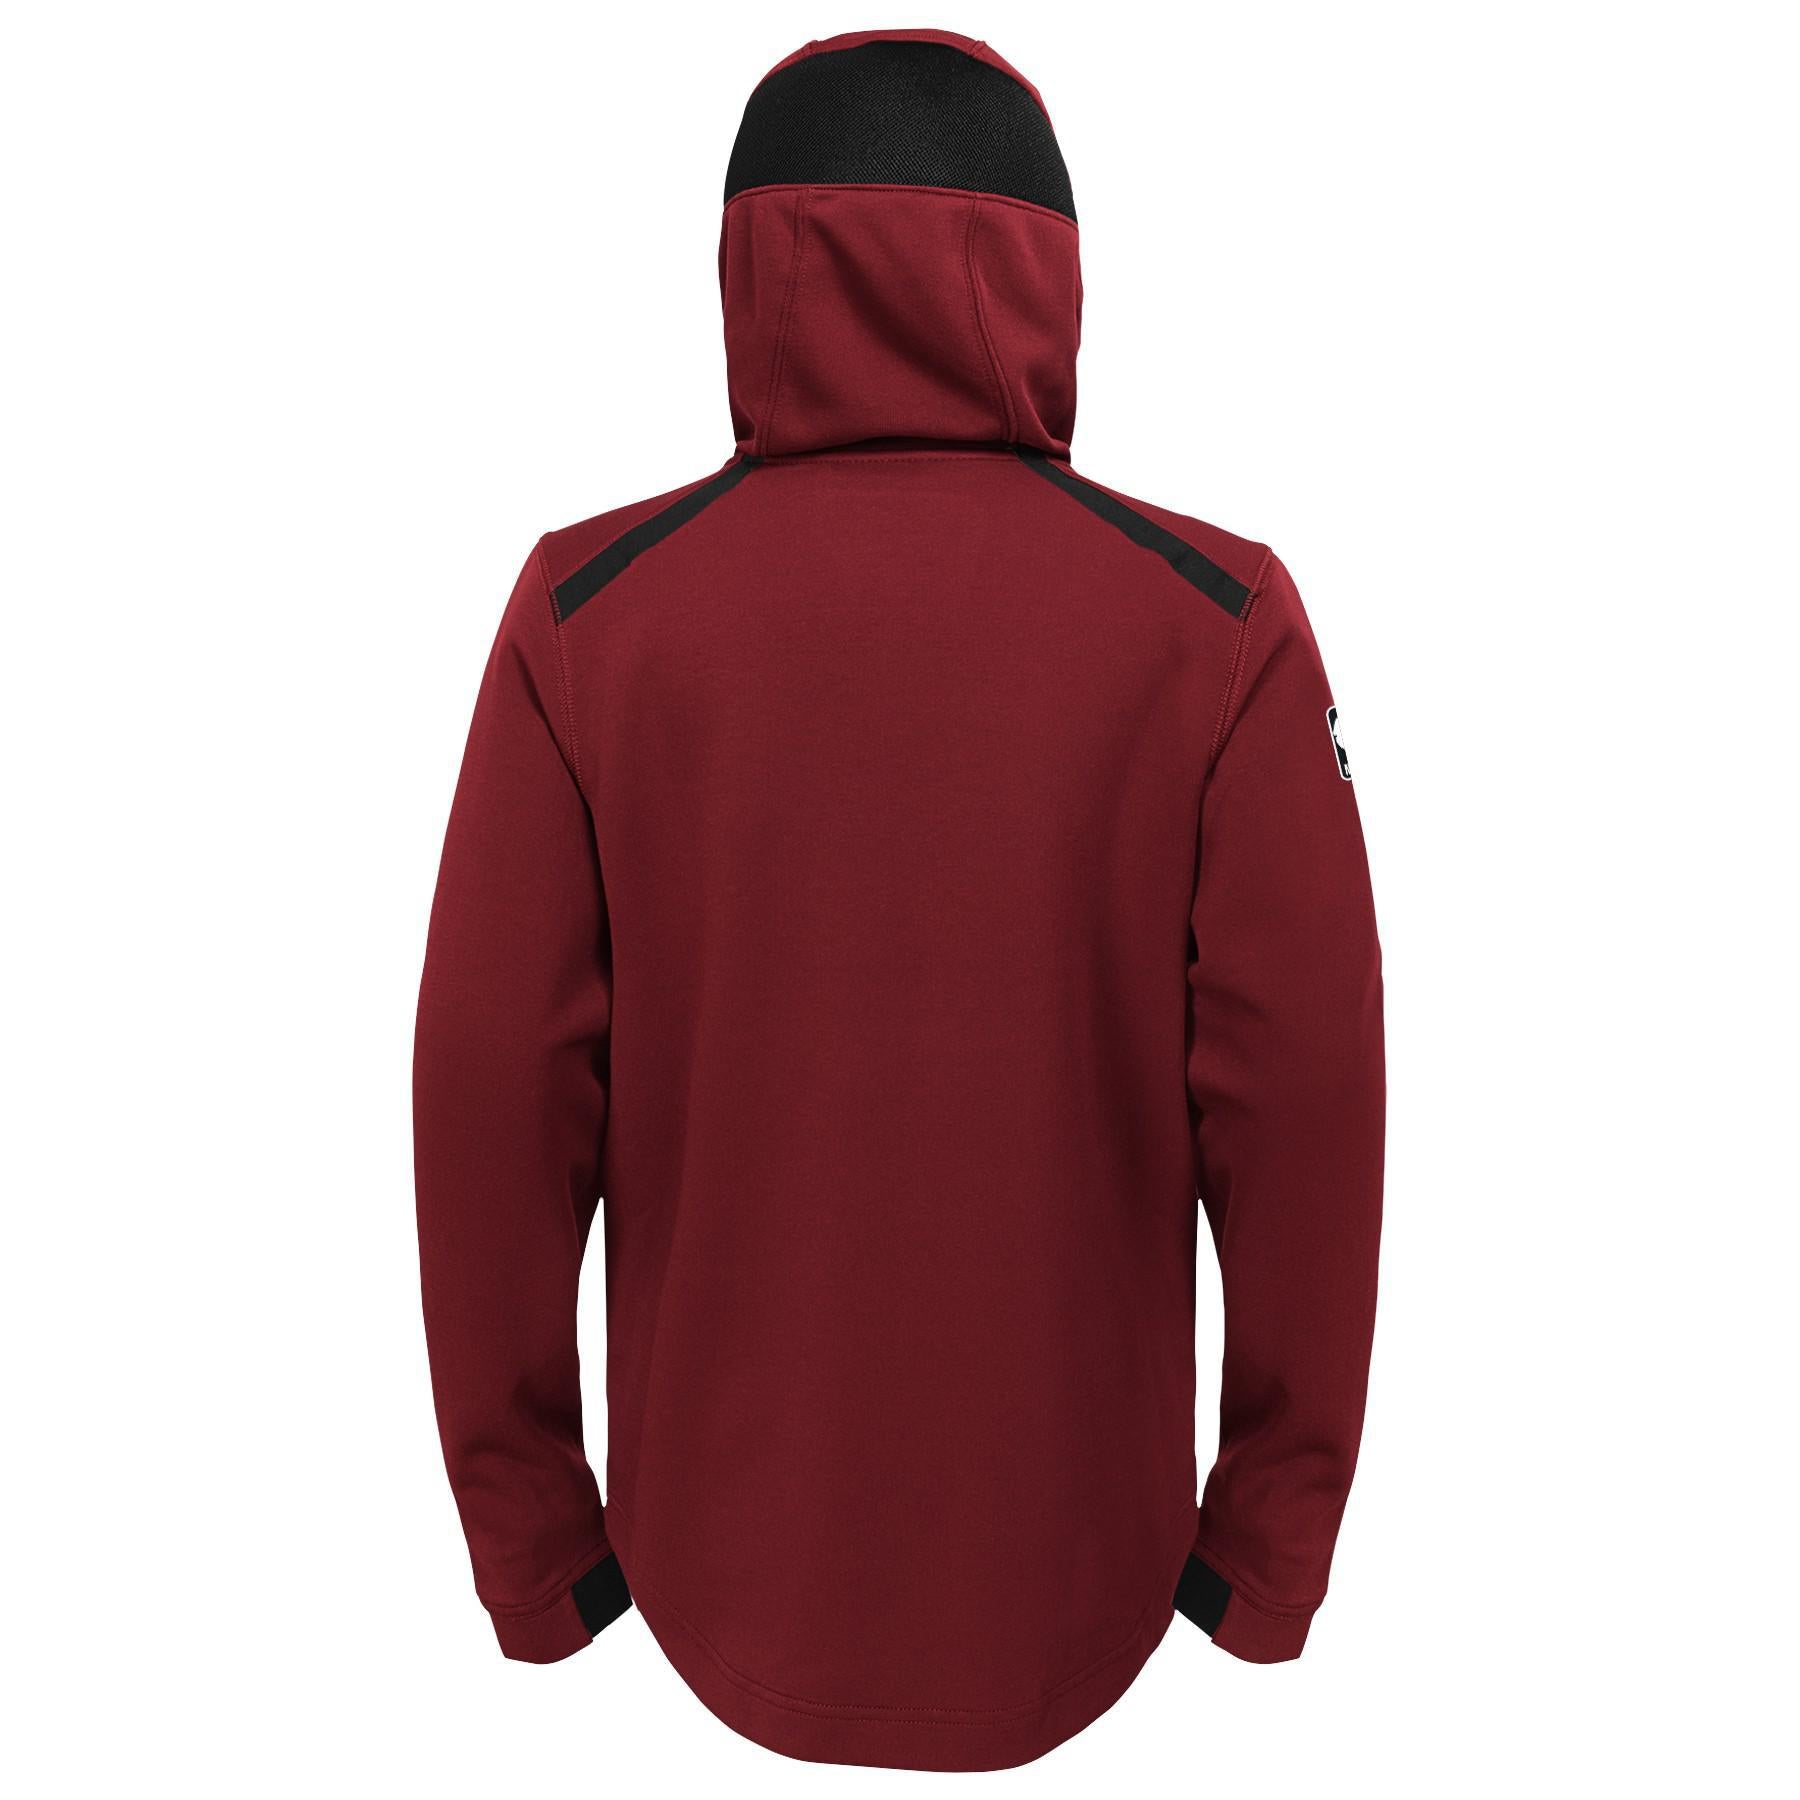 Cleveland Cavs Nike Showtime Zip up Hoodie Sweatshirt Youth Size 14/16  Large